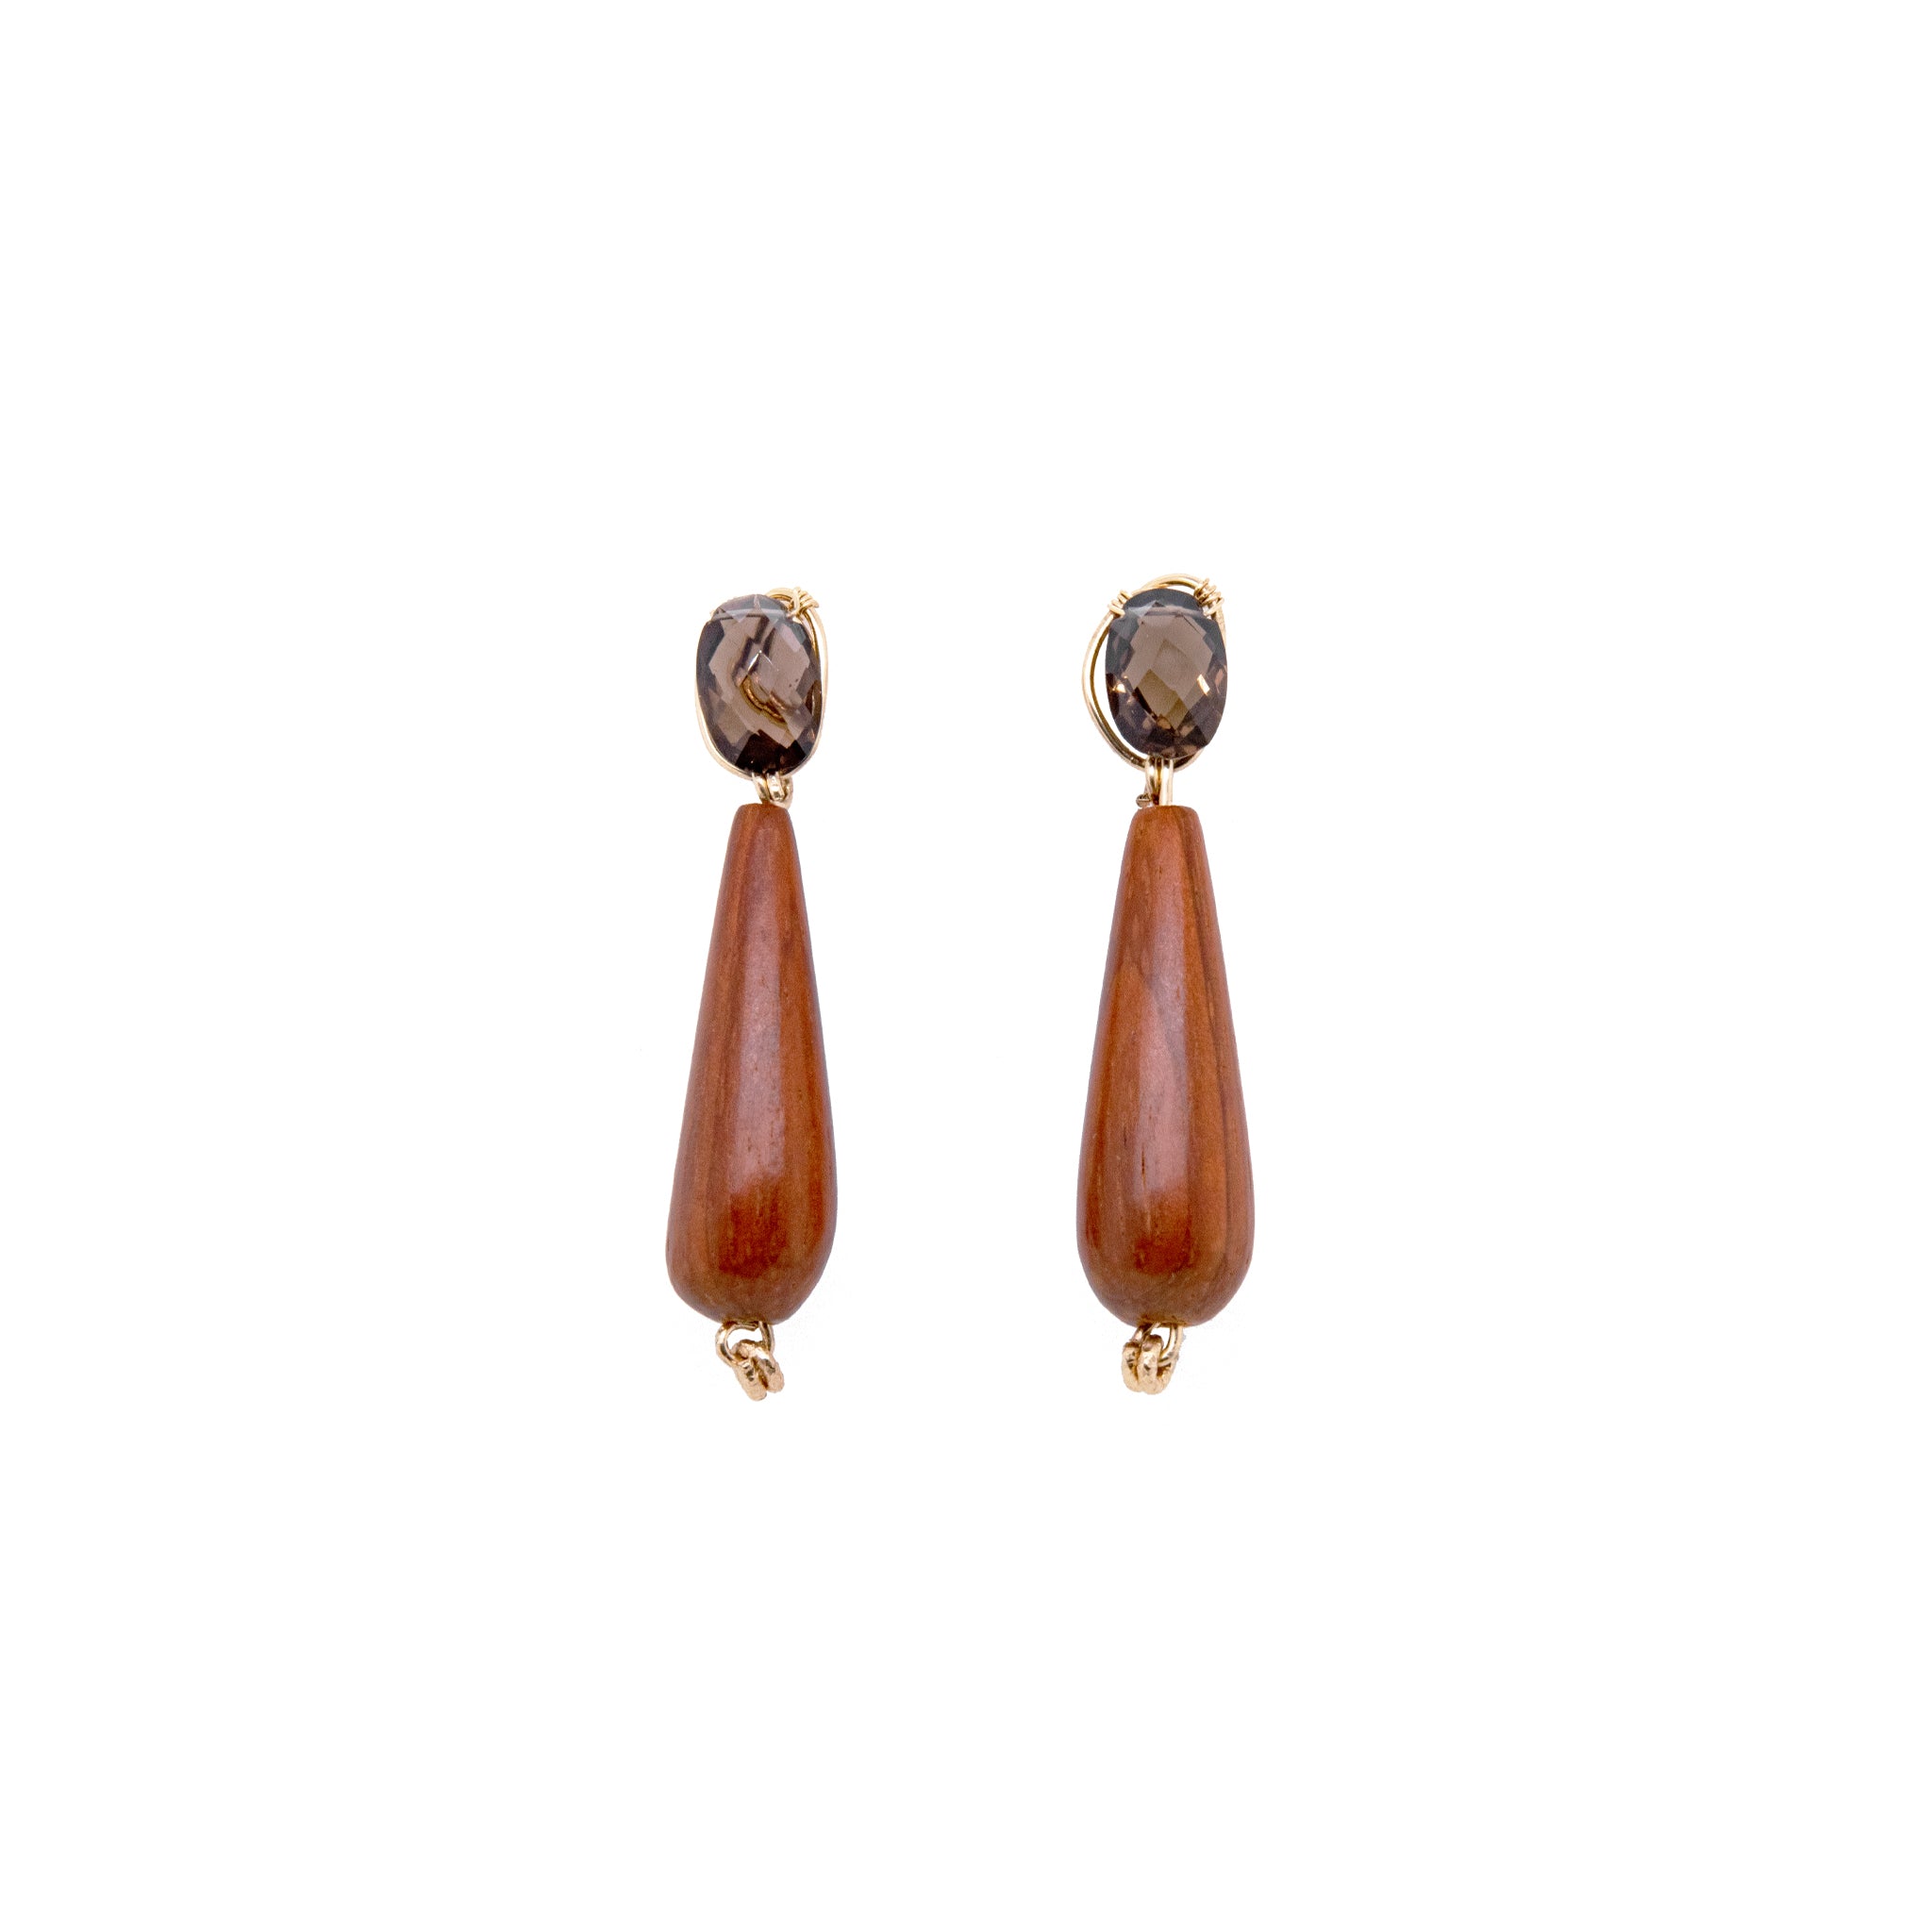 Wunuu Earring #2 - Smoky Quartz Earrings TARBAY   